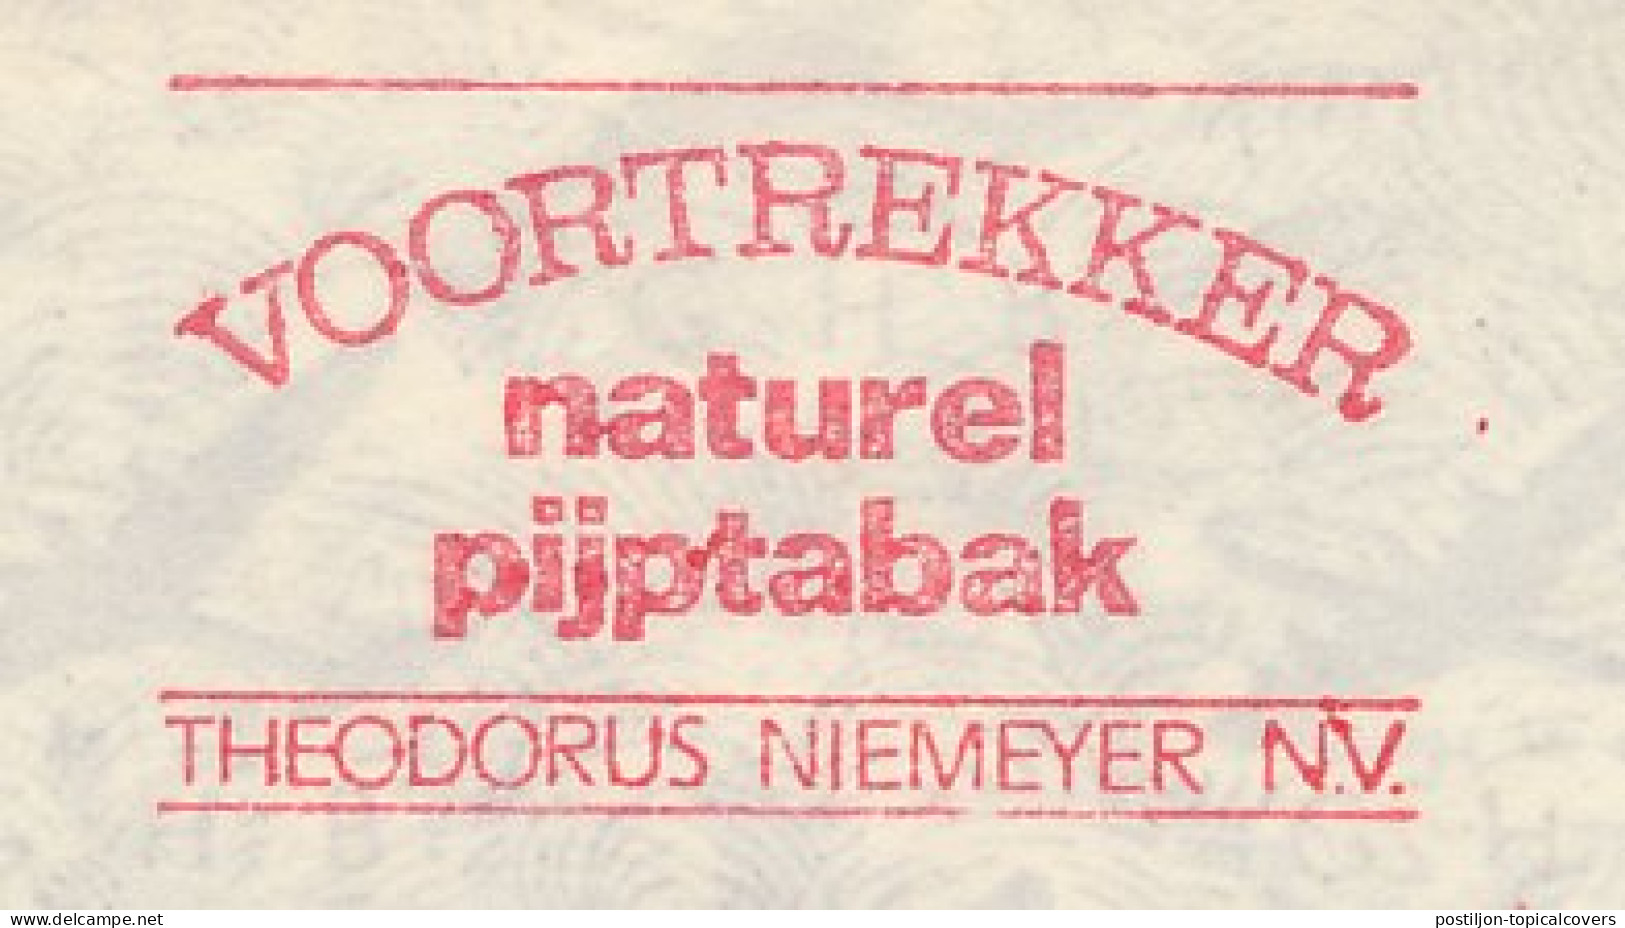 Meter Cover Netherlands 1971 Natural Pipe Tobacco - Voortrekker - Pioneer - Groningen - Tabaco